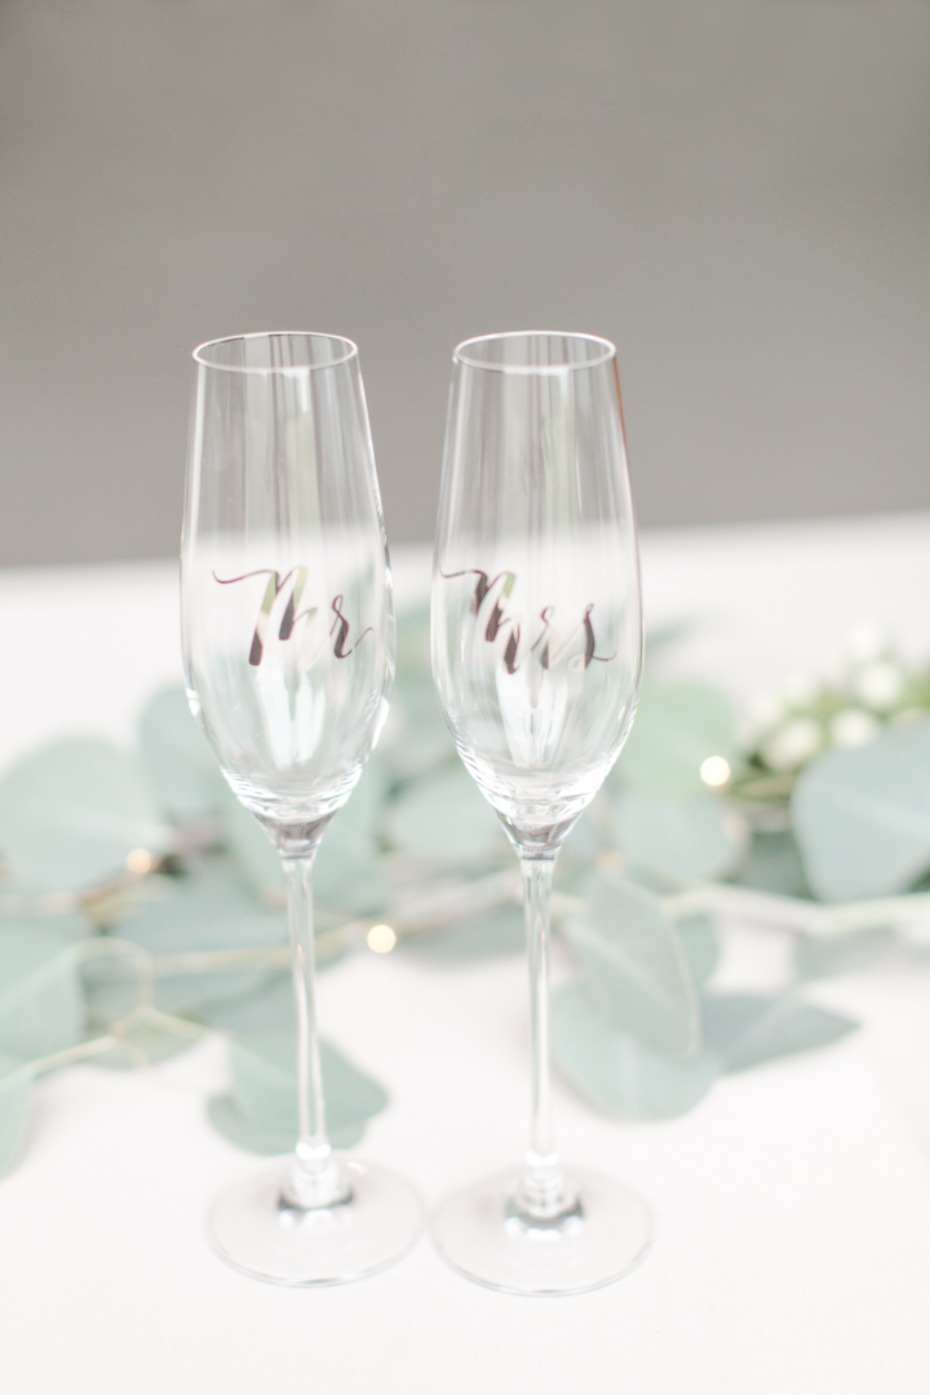 Mr. and Mrs. champagne glasses